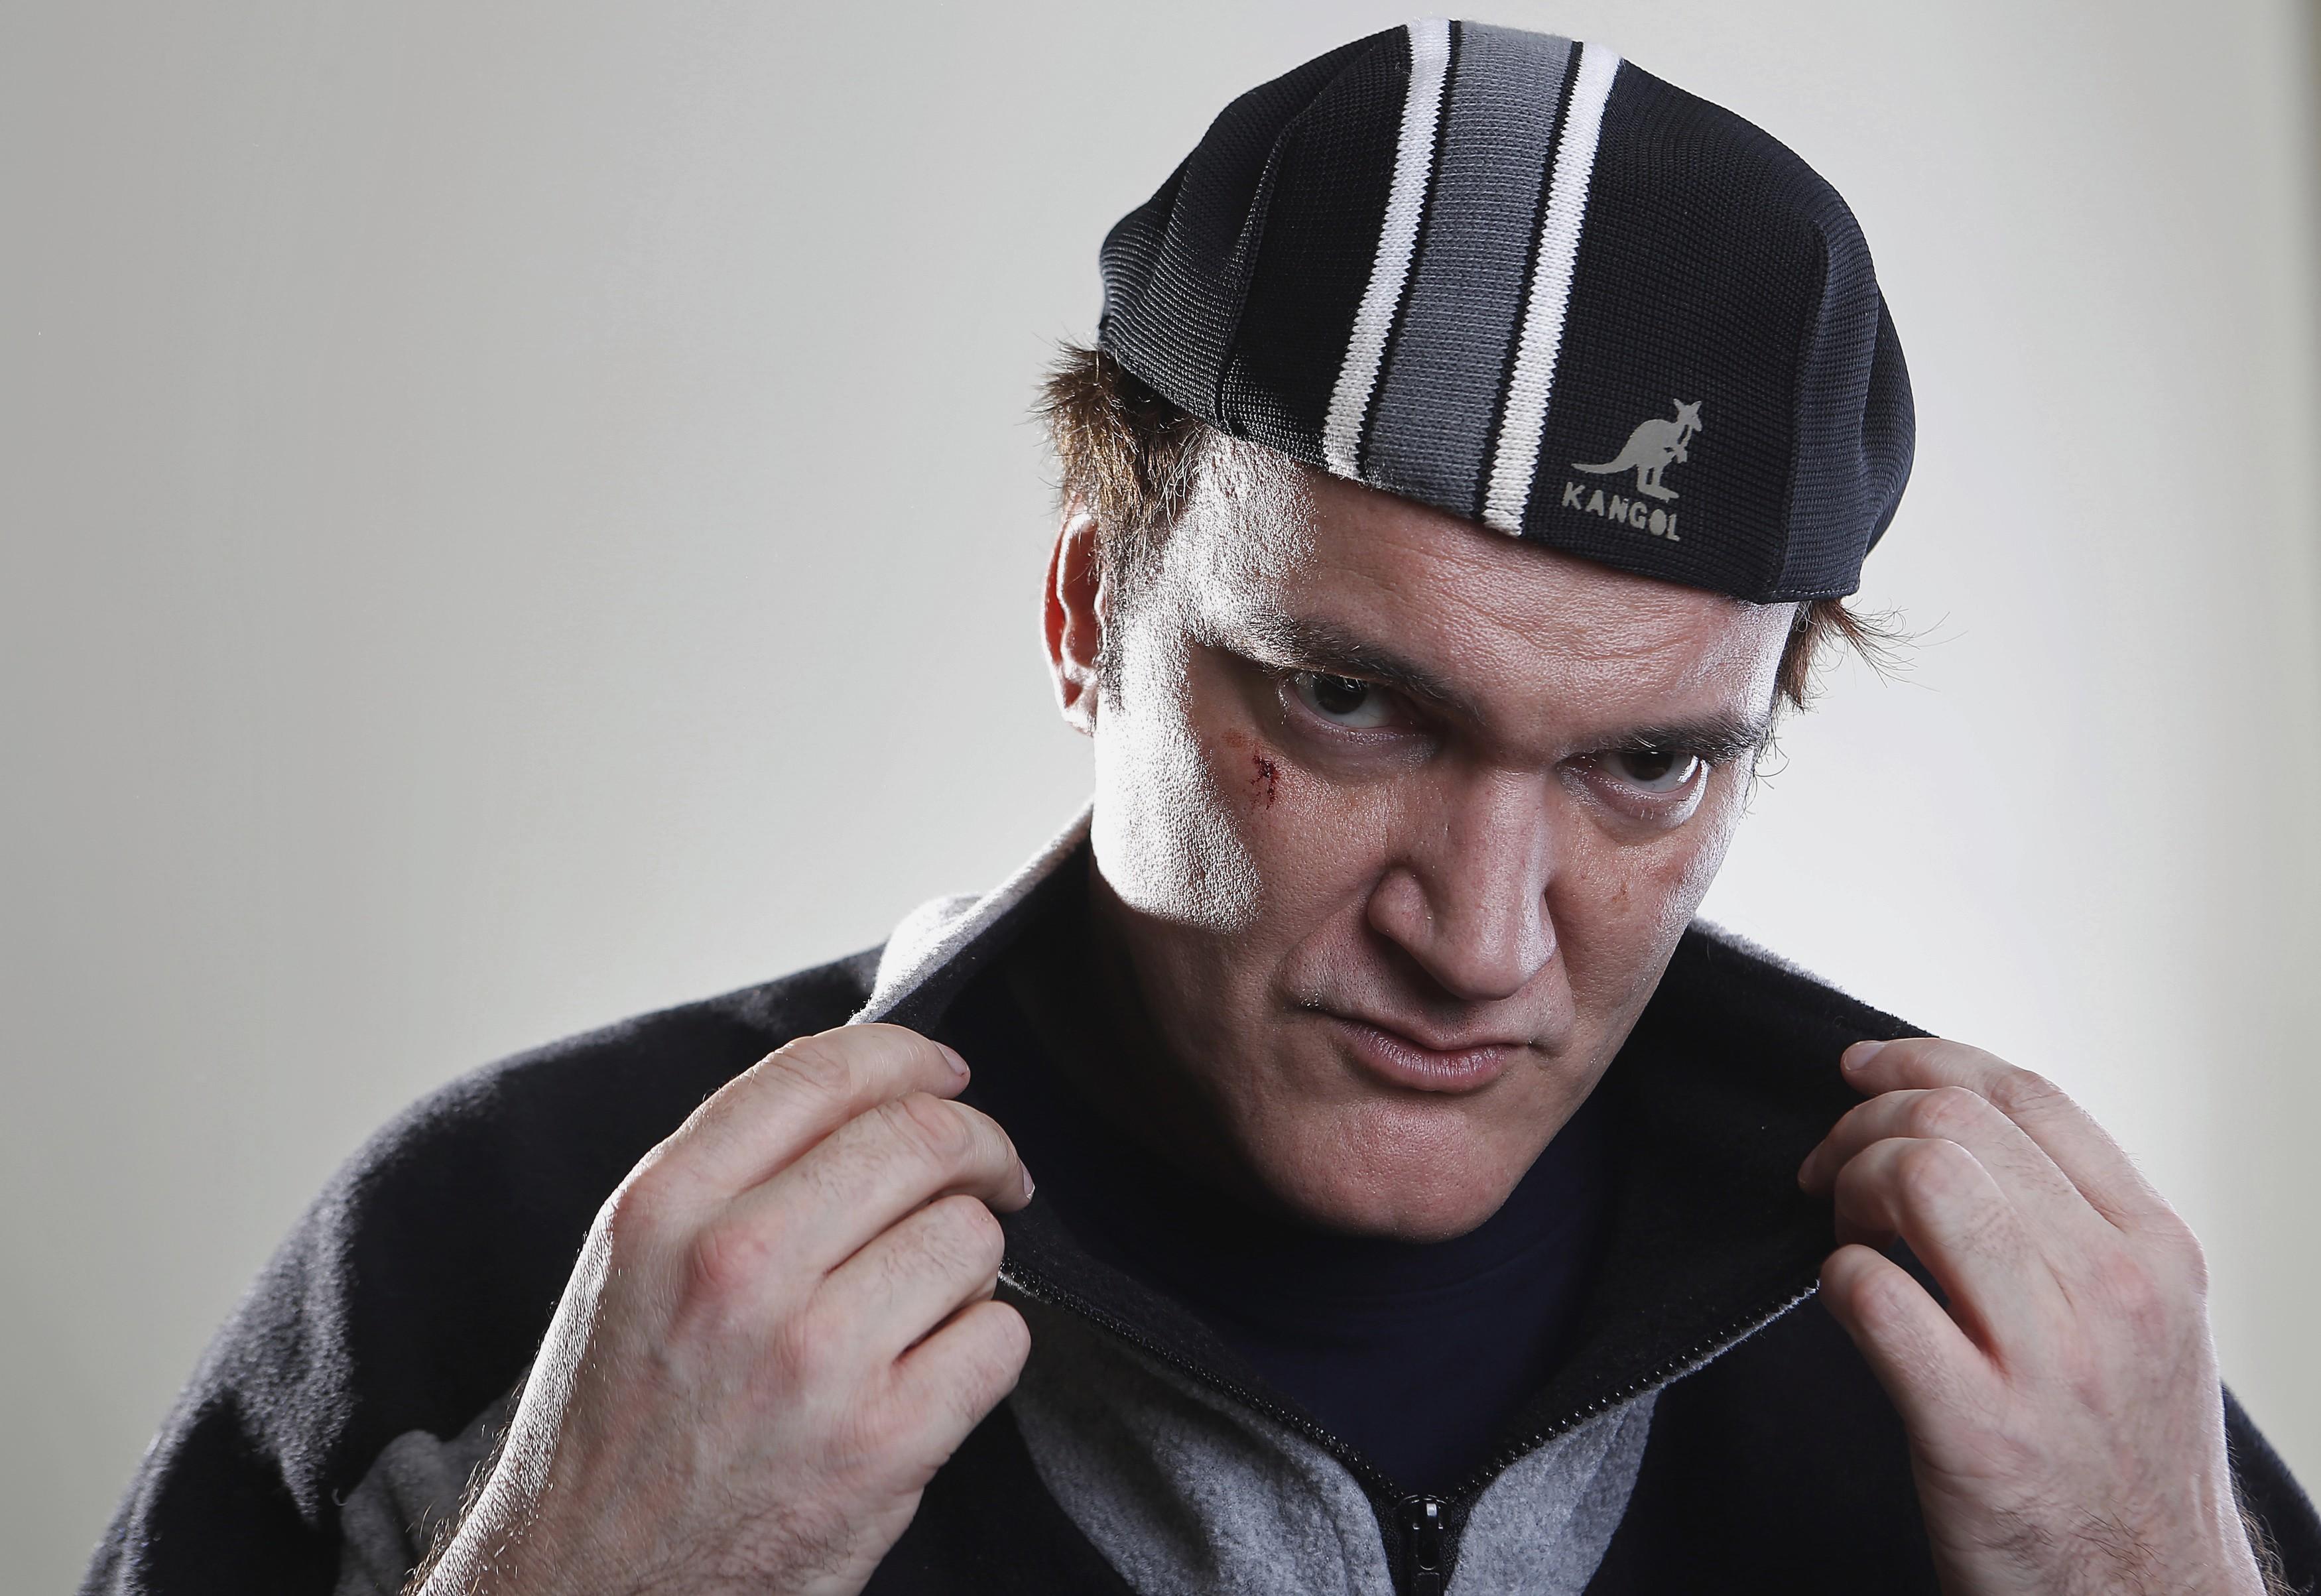 Quentin Tarantino Wallpaper HD